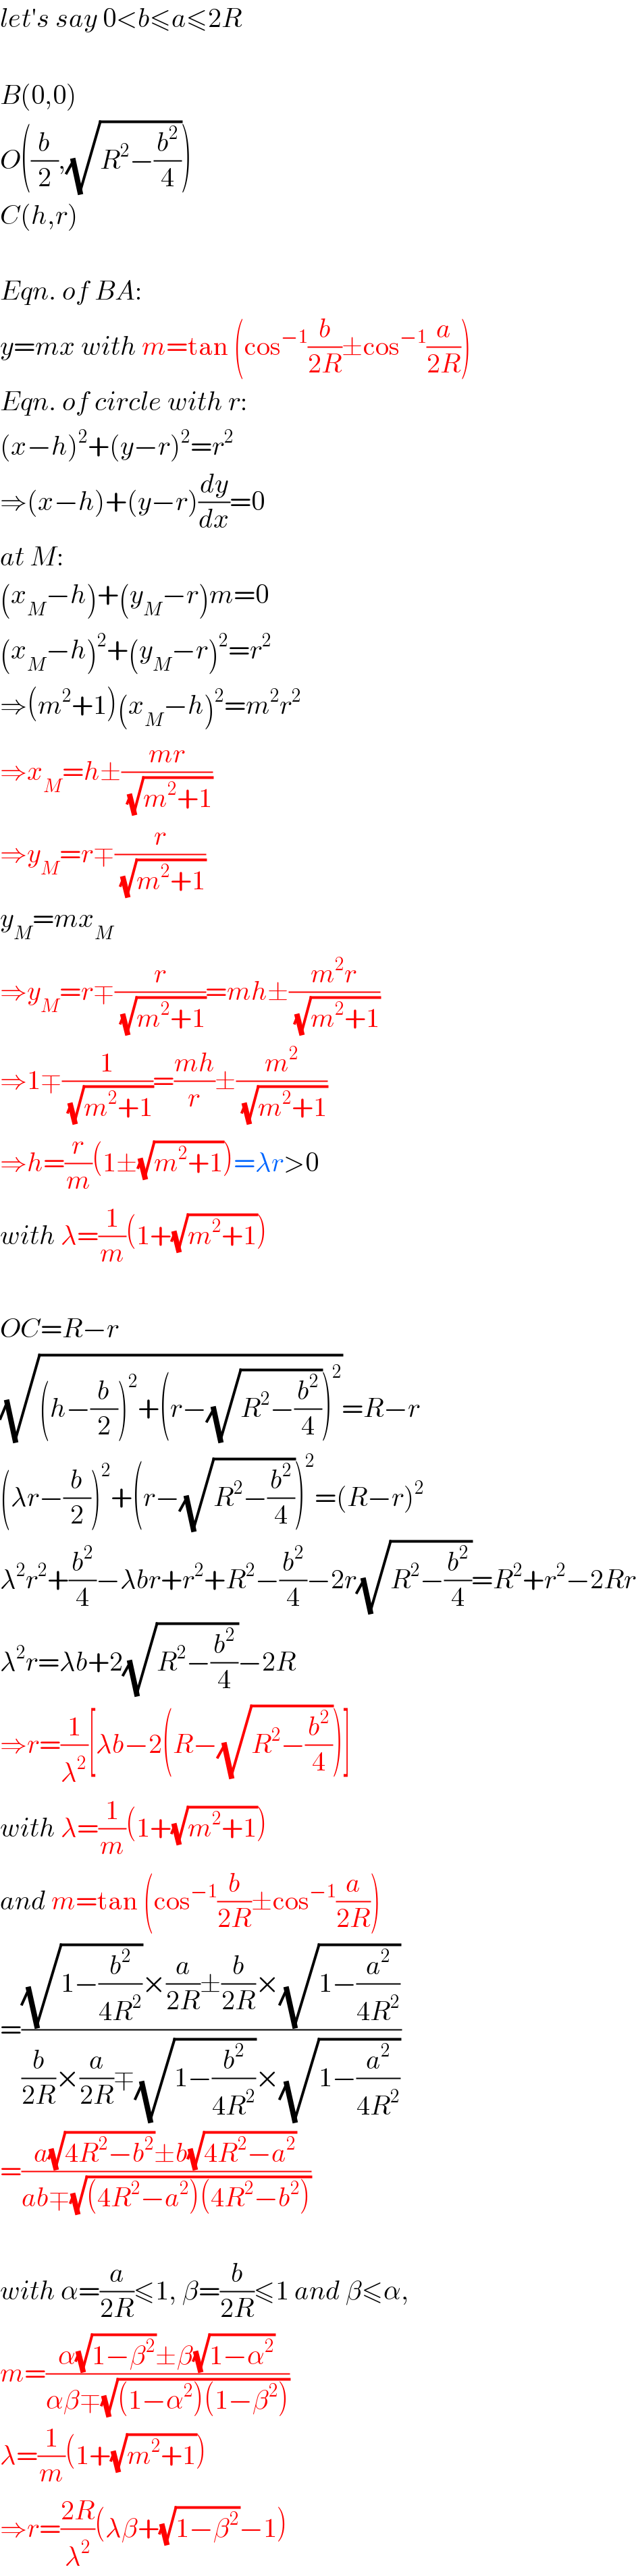 let′s say 0<b≤a≤2R    B(0,0)  O((b/2),(√(R^2 −(b^2 /4))))  C(h,r)    Eqn. of BA:  y=mx with m=tan (cos^(−1) (b/(2R))±cos^(−1) (a/(2R)))  Eqn. of circle with r:  (x−h)^2 +(y−r)^2 =r^2   ⇒(x−h)+(y−r)(dy/dx)=0  at M:  (x_M −h)+(y_M −r)m=0  (x_M −h)^2 +(y_M −r)^2 =r^2   ⇒(m^2 +1)(x_M −h)^2 =m^2 r^2   ⇒x_M =h±((mr)/(√(m^2 +1)))  ⇒y_M =r∓(r/(√(m^2 +1)))  y_M =mx_M   ⇒y_M =r∓(r/(√(m^2 +1)))=mh±((m^2 r)/(√(m^2 +1)))  ⇒1∓(1/(√(m^2 +1)))=((mh)/r)±(m^2 /(√(m^2 +1)))  ⇒h=(r/m)(1±(√(m^2 +1)))=λr>0  with λ=(1/m)(1+(√(m^2 +1)))    OC=R−r  (√((h−(b/2))^2 +(r−(√(R^2 −(b^2 /4))))^2 ))=R−r  (λr−(b/2))^2 +(r−(√(R^2 −(b^2 /4))))^2 =(R−r)^2   λ^2 r^2 +(b^2 /4)−λbr+r^2 +R^2 −(b^2 /4)−2r(√(R^2 −(b^2 /4)))=R^2 +r^2 −2Rr  λ^2 r=λb+2(√(R^2 −(b^2 /4)))−2R  ⇒r=(1/λ^2 )[λb−2(R−(√(R^2 −(b^2 /4))))]  with λ=(1/m)(1+(√(m^2 +1)))  and m=tan (cos^(−1) (b/(2R))±cos^(−1) (a/(2R)))  =(((√(1−(b^2 /(4R^2 ))))×(a/(2R))±(b/(2R))×(√(1−(a^2 /(4R^2 )))))/((b/(2R))×(a/(2R))∓(√(1−(b^2 /(4R^2 ))))×(√(1−(a^2 /(4R^2 ))))))  =((a(√(4R^2 −b^2 ))±b(√(4R^2 −a^2 )))/(ab∓(√((4R^2 −a^2 )(4R^2 −b^2 )))))    with α=(a/(2R))≤1, β=(b/(2R))≤1 and β≤α,  m=((α(√(1−β^2 ))±β(√(1−α^2 )))/(αβ∓(√((1−α^2 )(1−β^2 )))))  λ=(1/m)(1+(√(m^2 +1)))  ⇒r=((2R)/λ^2 )(λβ+(√(1−β^2 ))−1)  